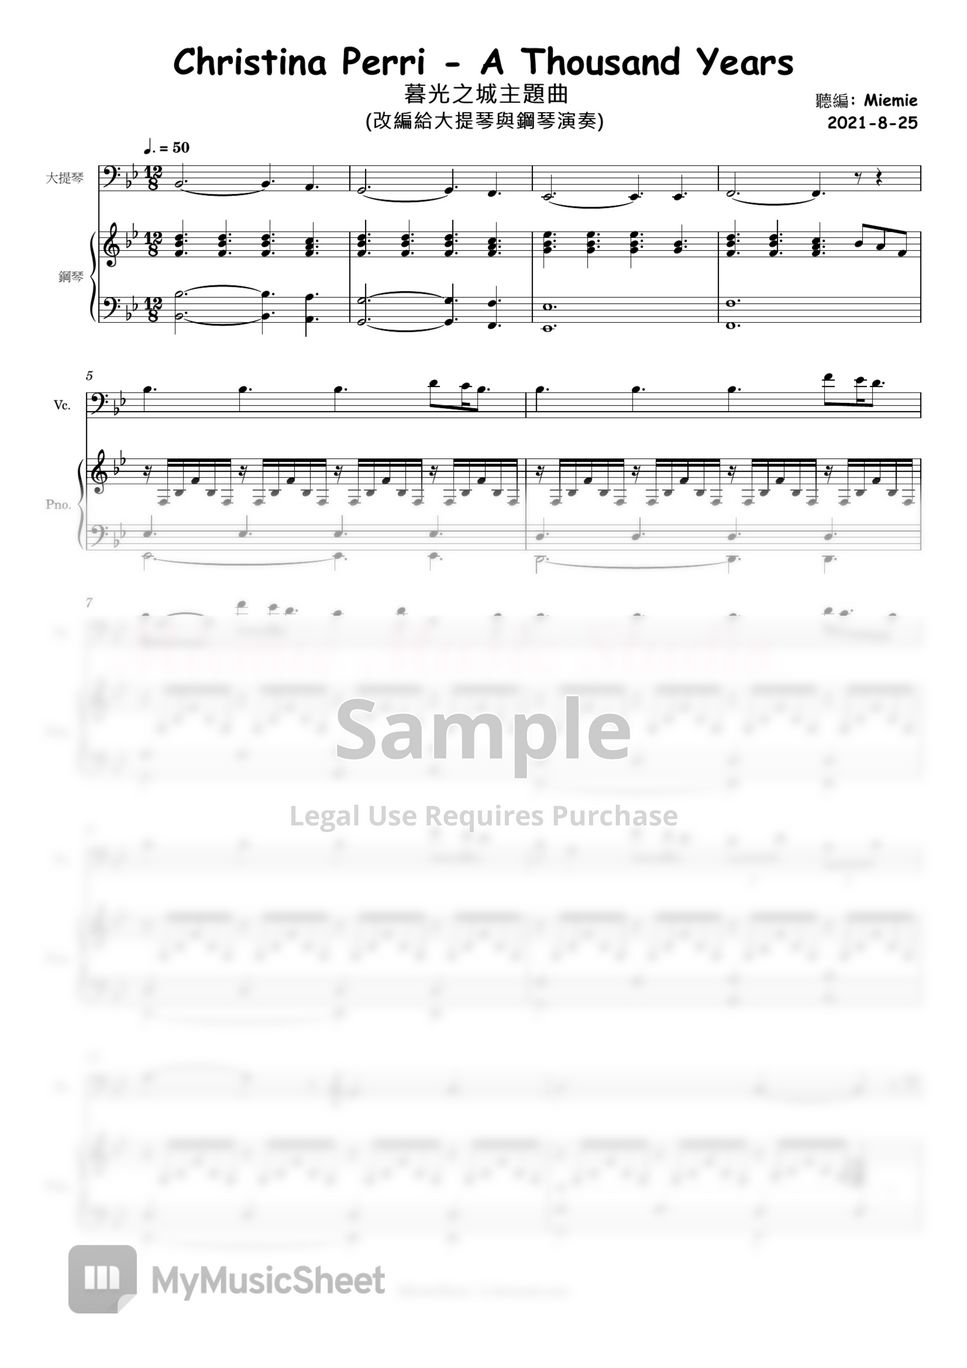 Christina Perri - A Thousand Years (破晓主题曲：千年之戀) 大提琴譜&鋼琴伴奏譜/Cello Sheets/Piano Sheets (cello, piano) by Miemie Music Studio